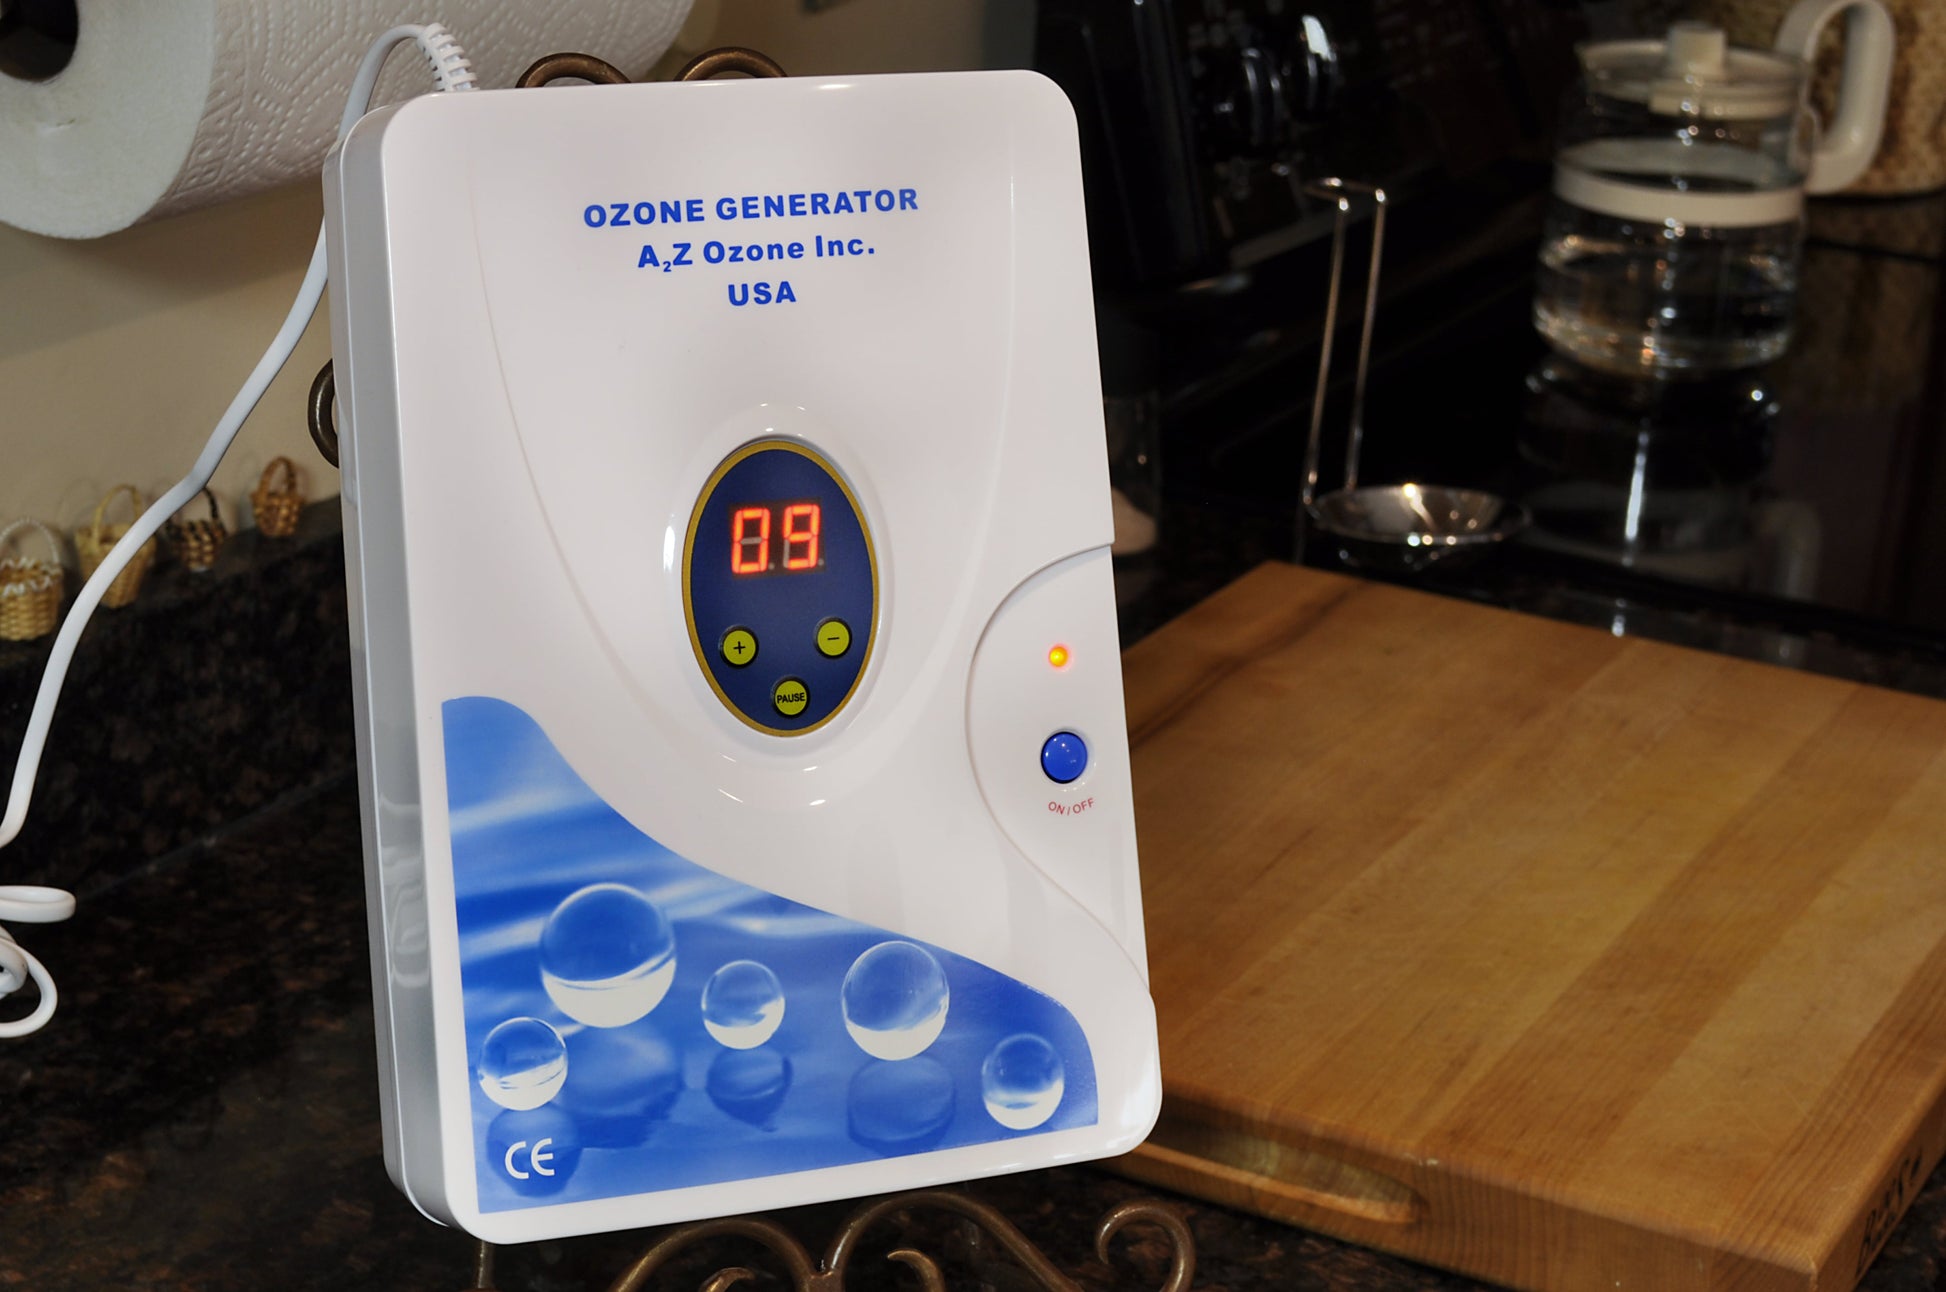 Hot Selling Air Feeding Ozone Therapy Machine Generators